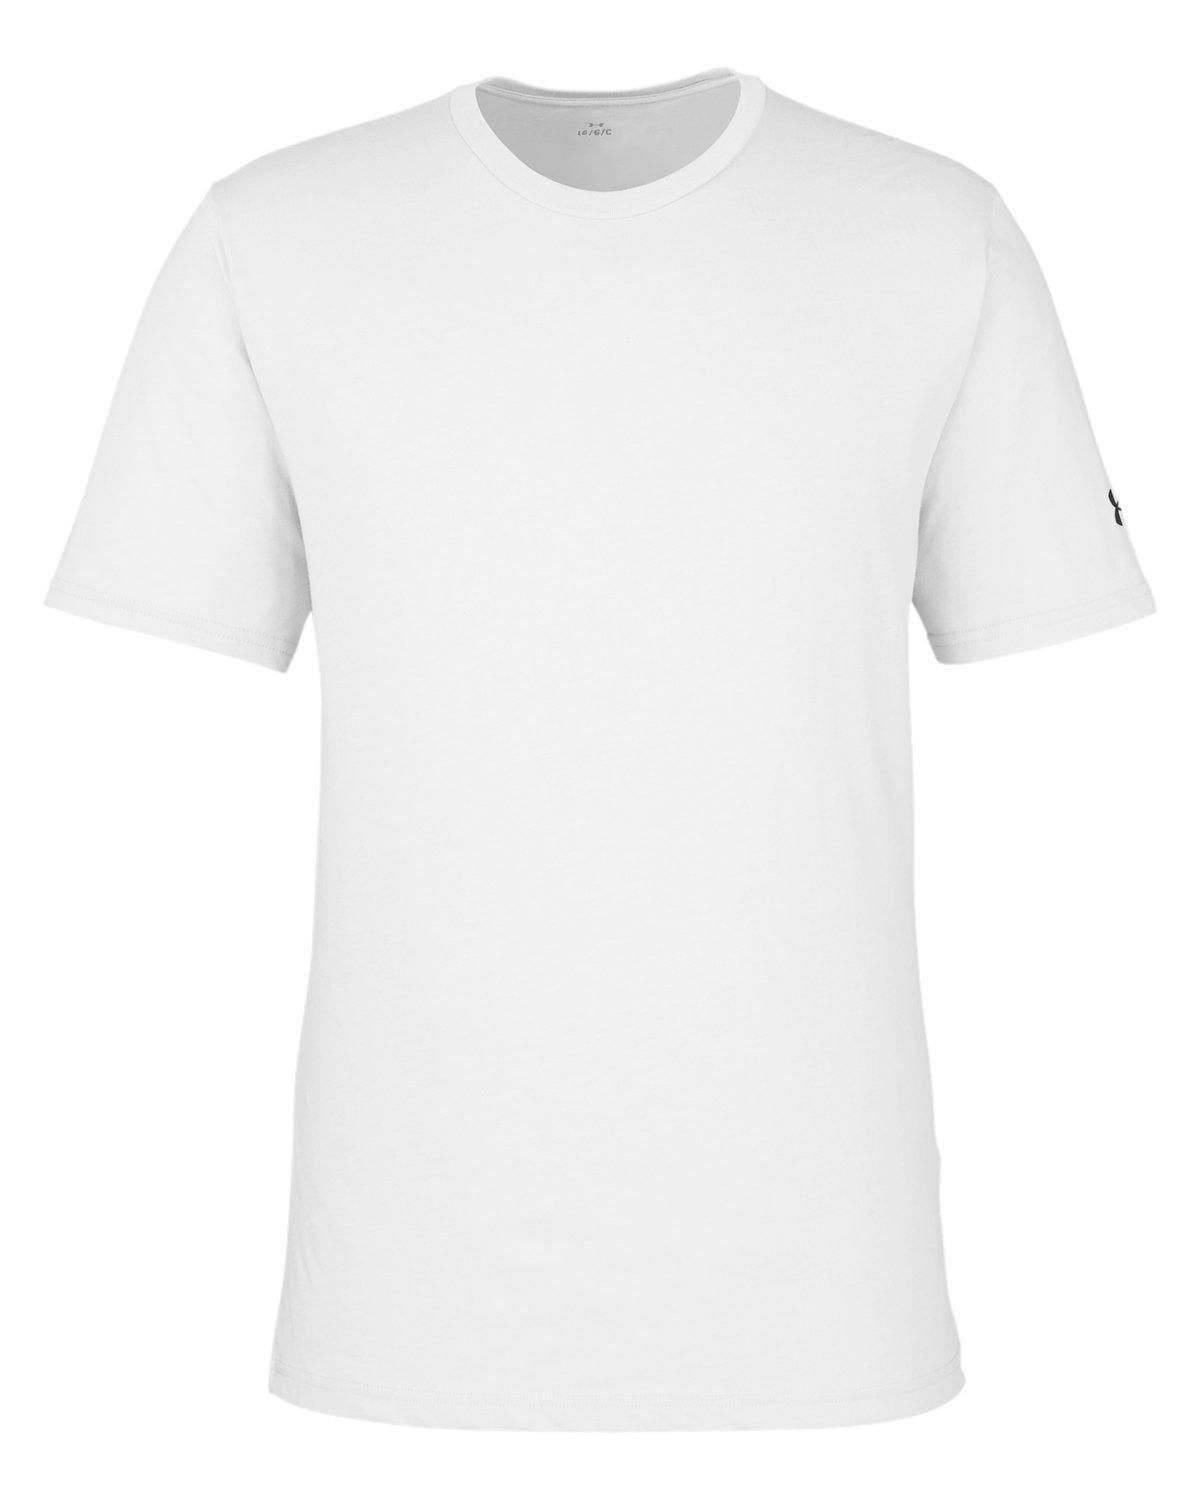 Image for Men's Athletic 2.0 T-Shirt